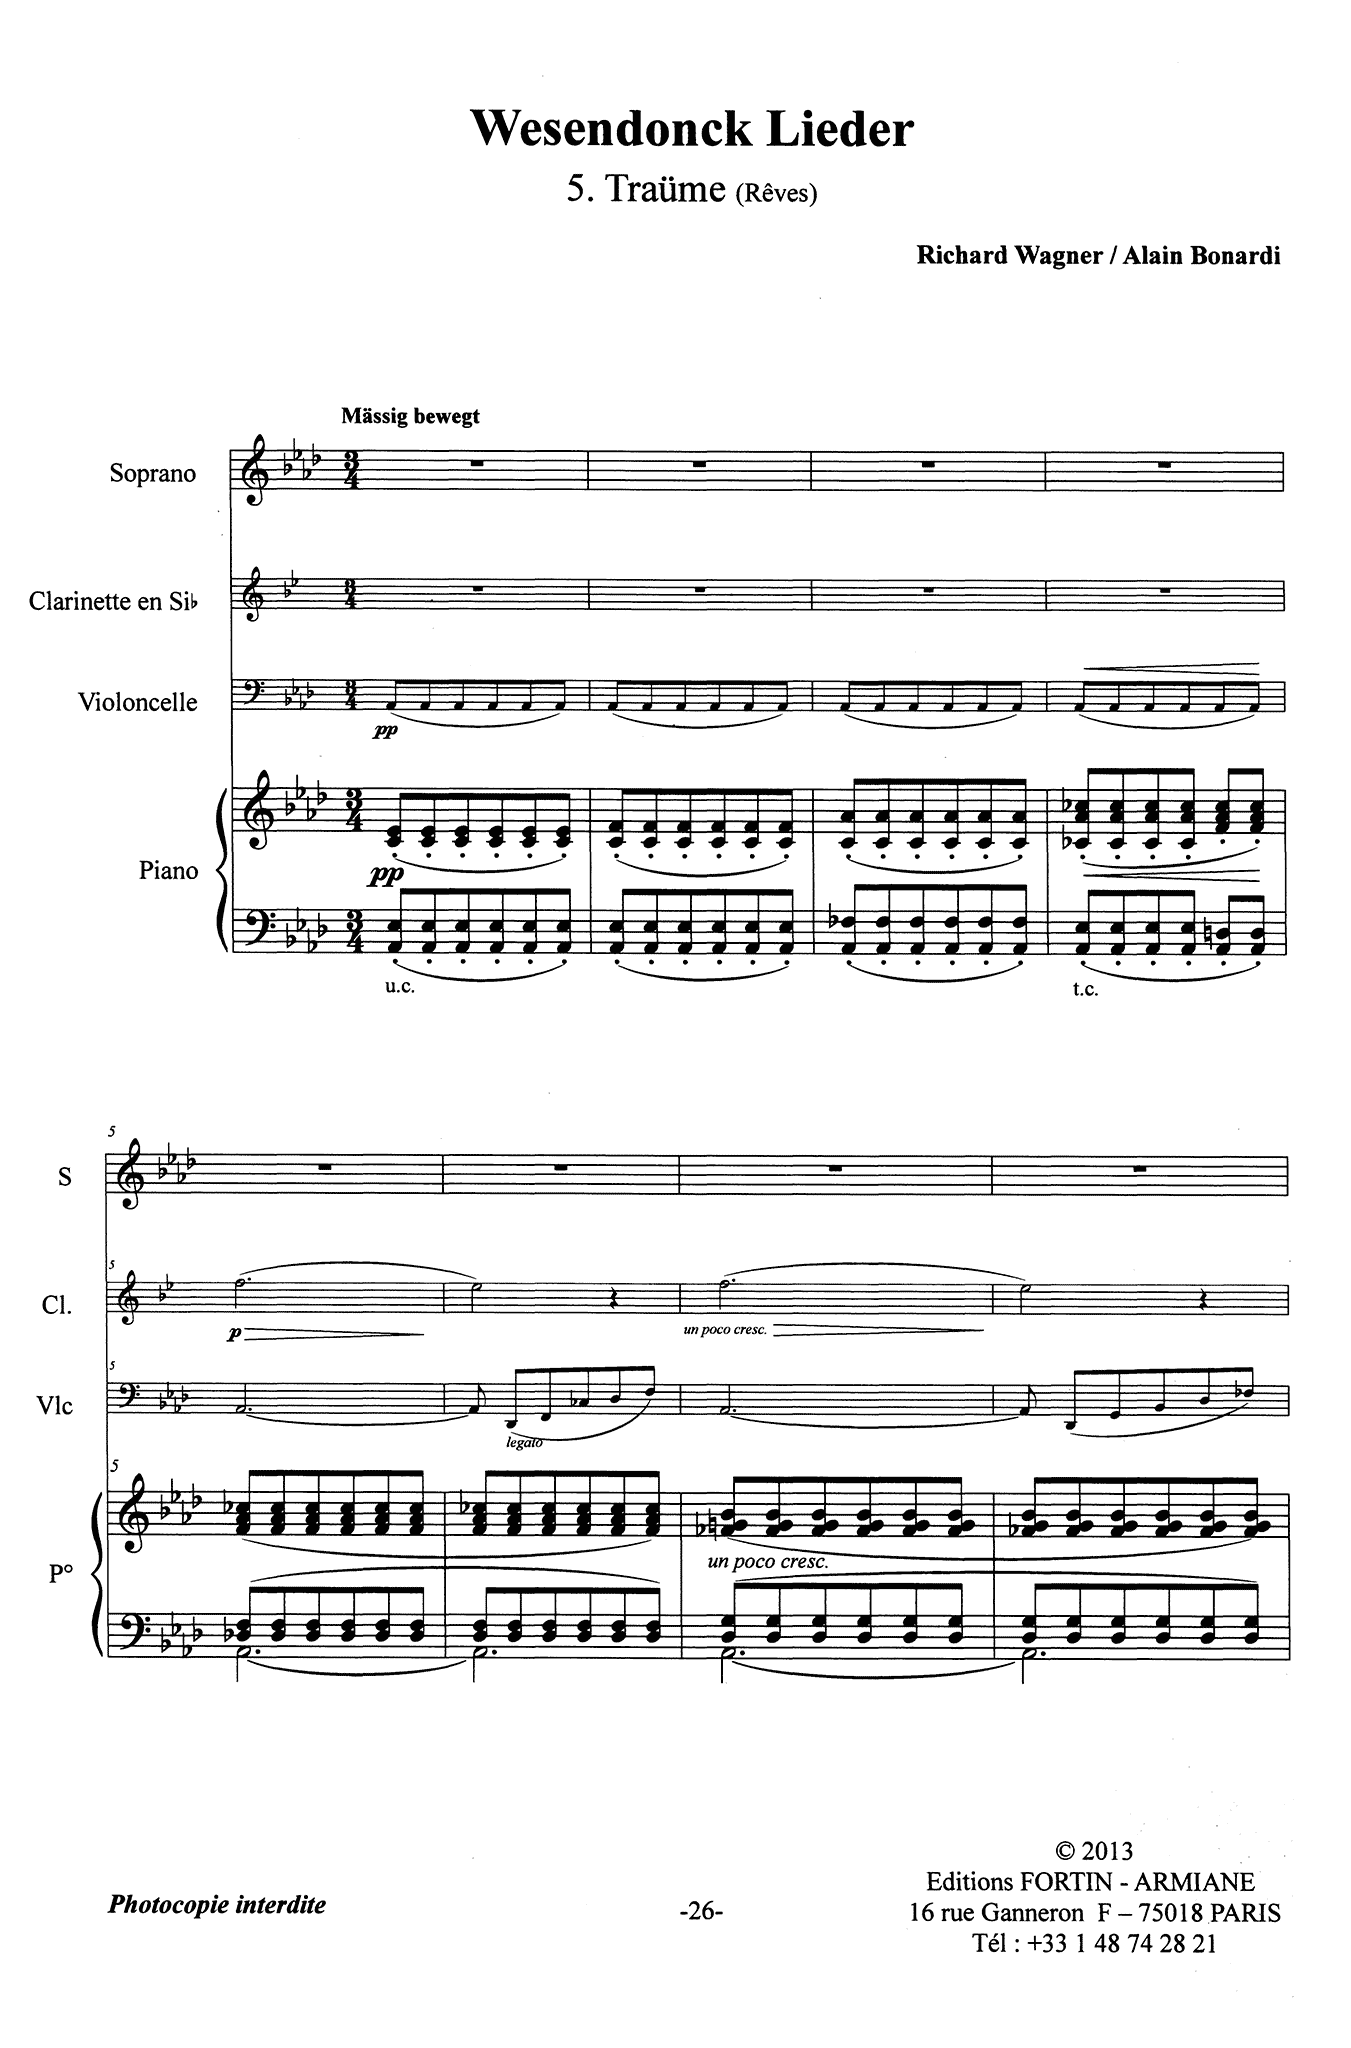 Wagner Wesendonck Lieder, WWV 91 clarinet cello piano arrangement Bonardi -  Song 5